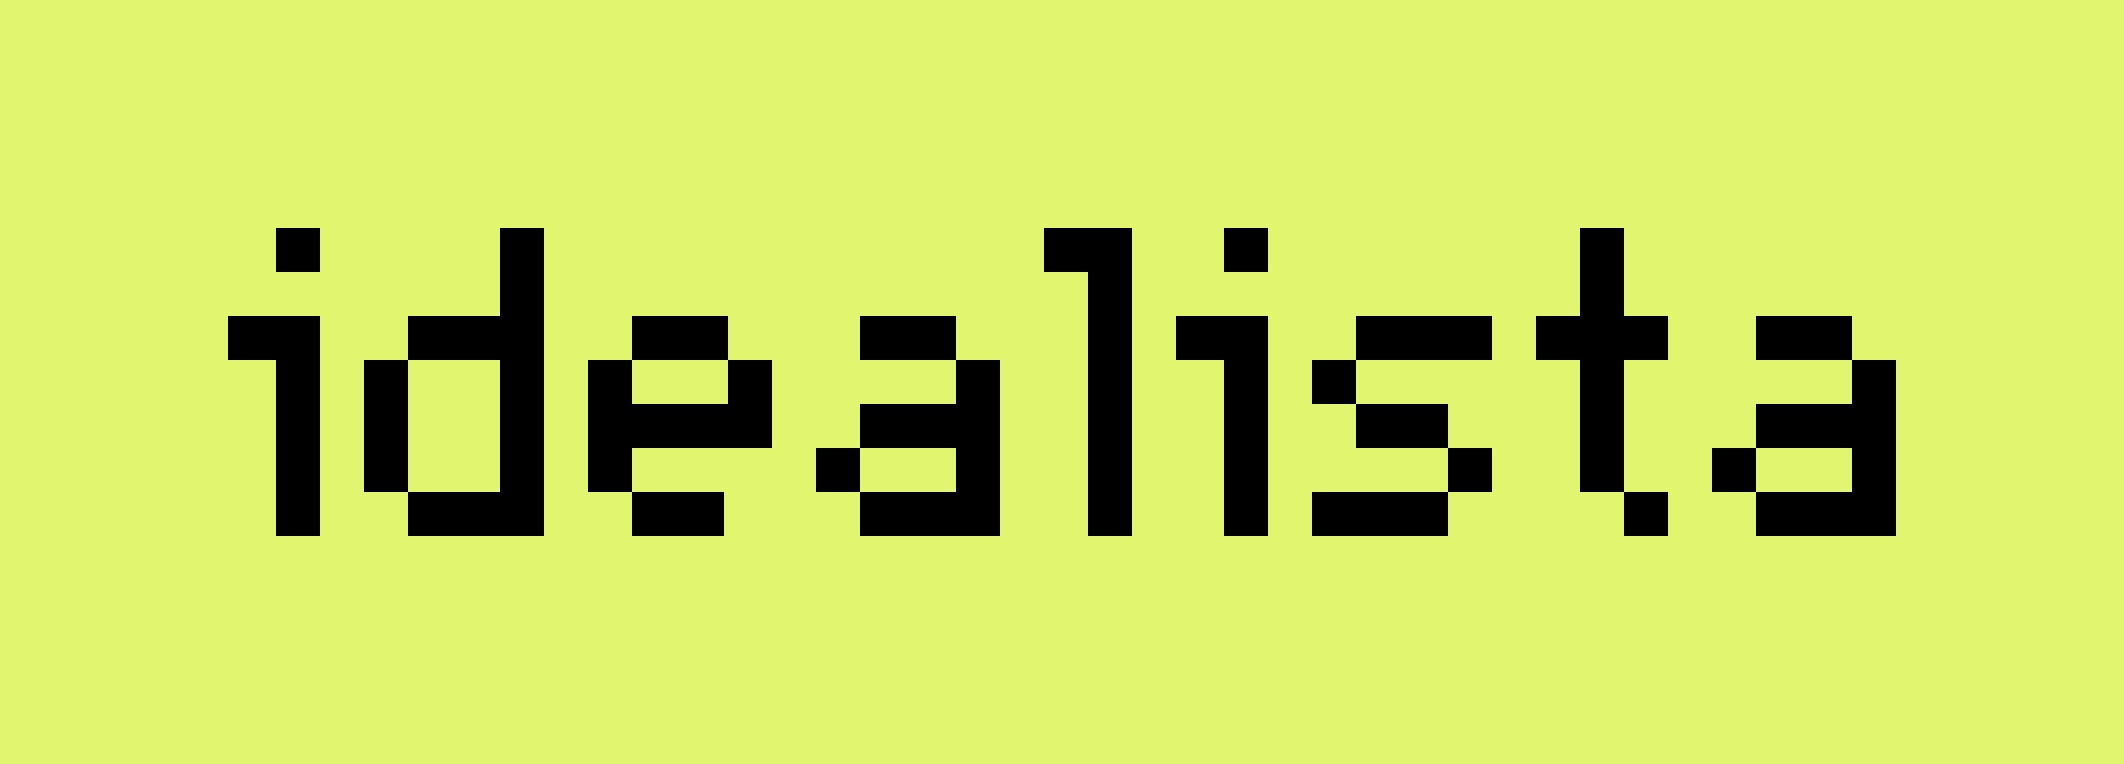 logo-idealista-jpg.jpg